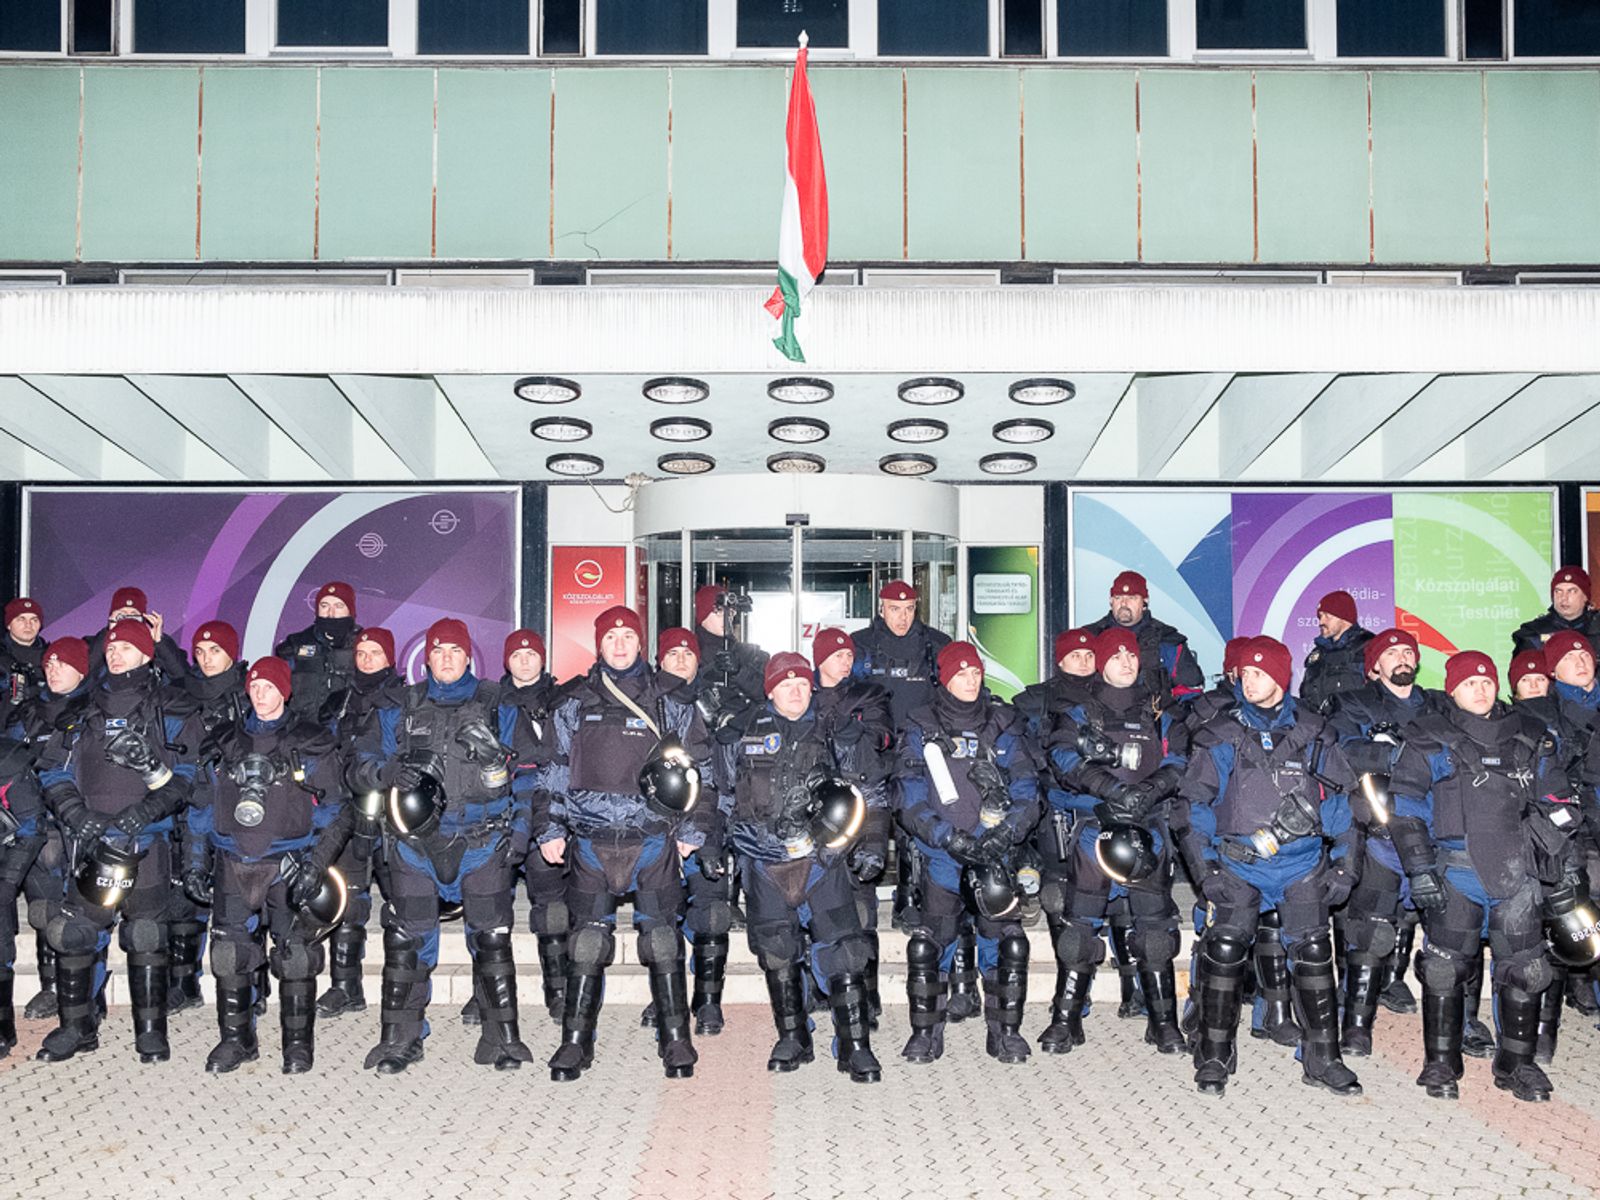 © Michal Adamski - Budapest. The police protecting the building of Hungary’s public radio Magyar Rádió.